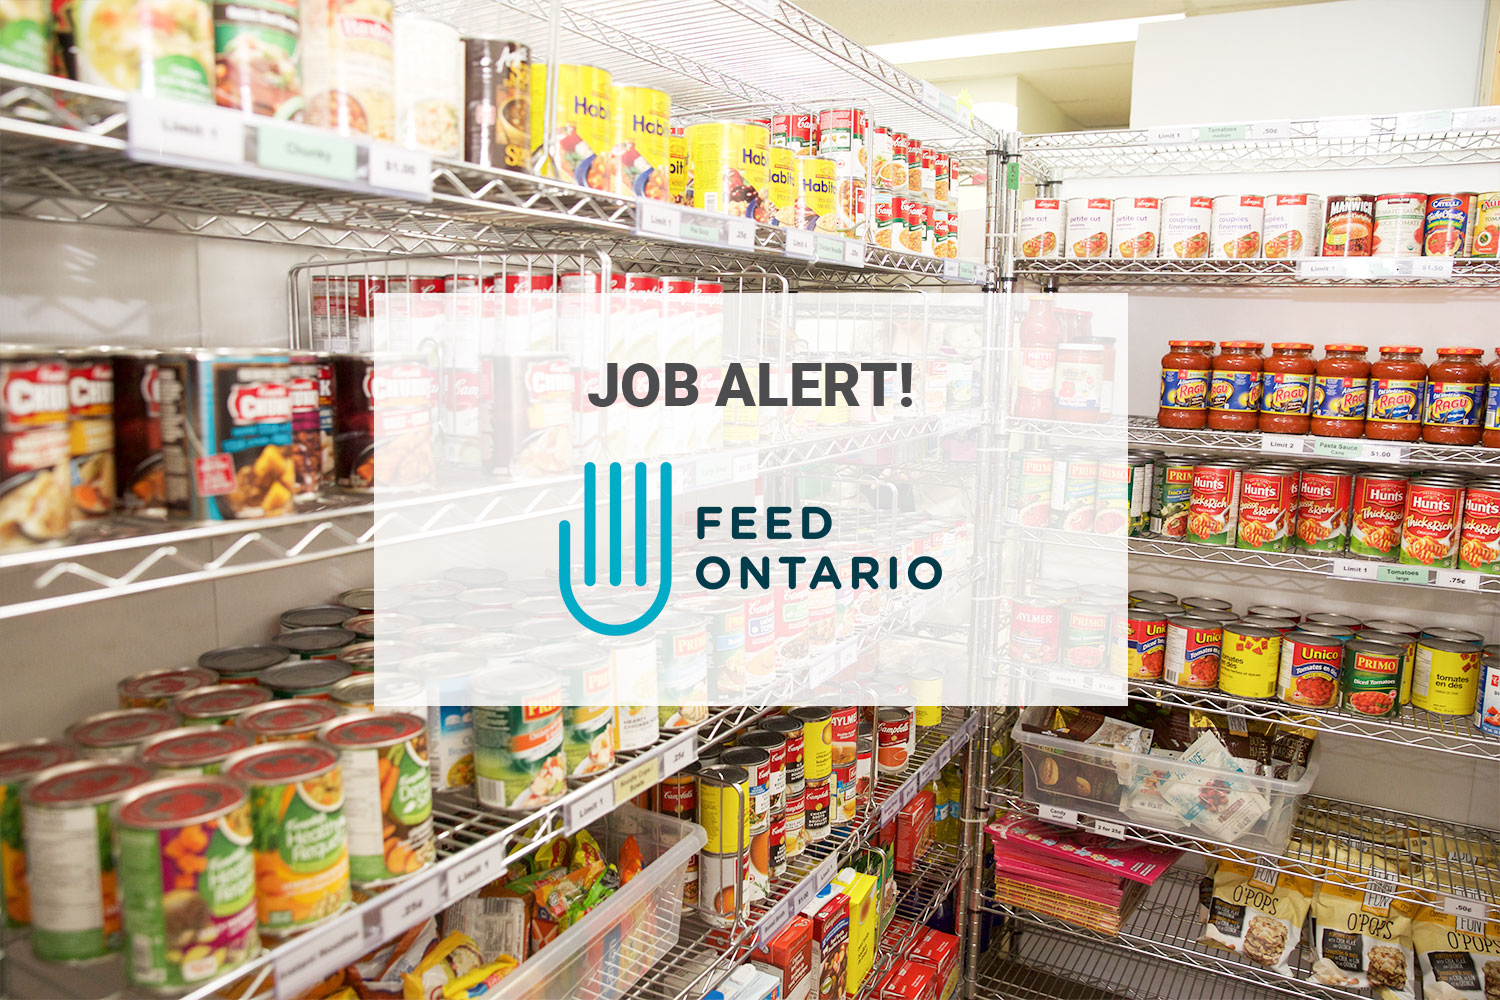 Feed Ontario is hiring